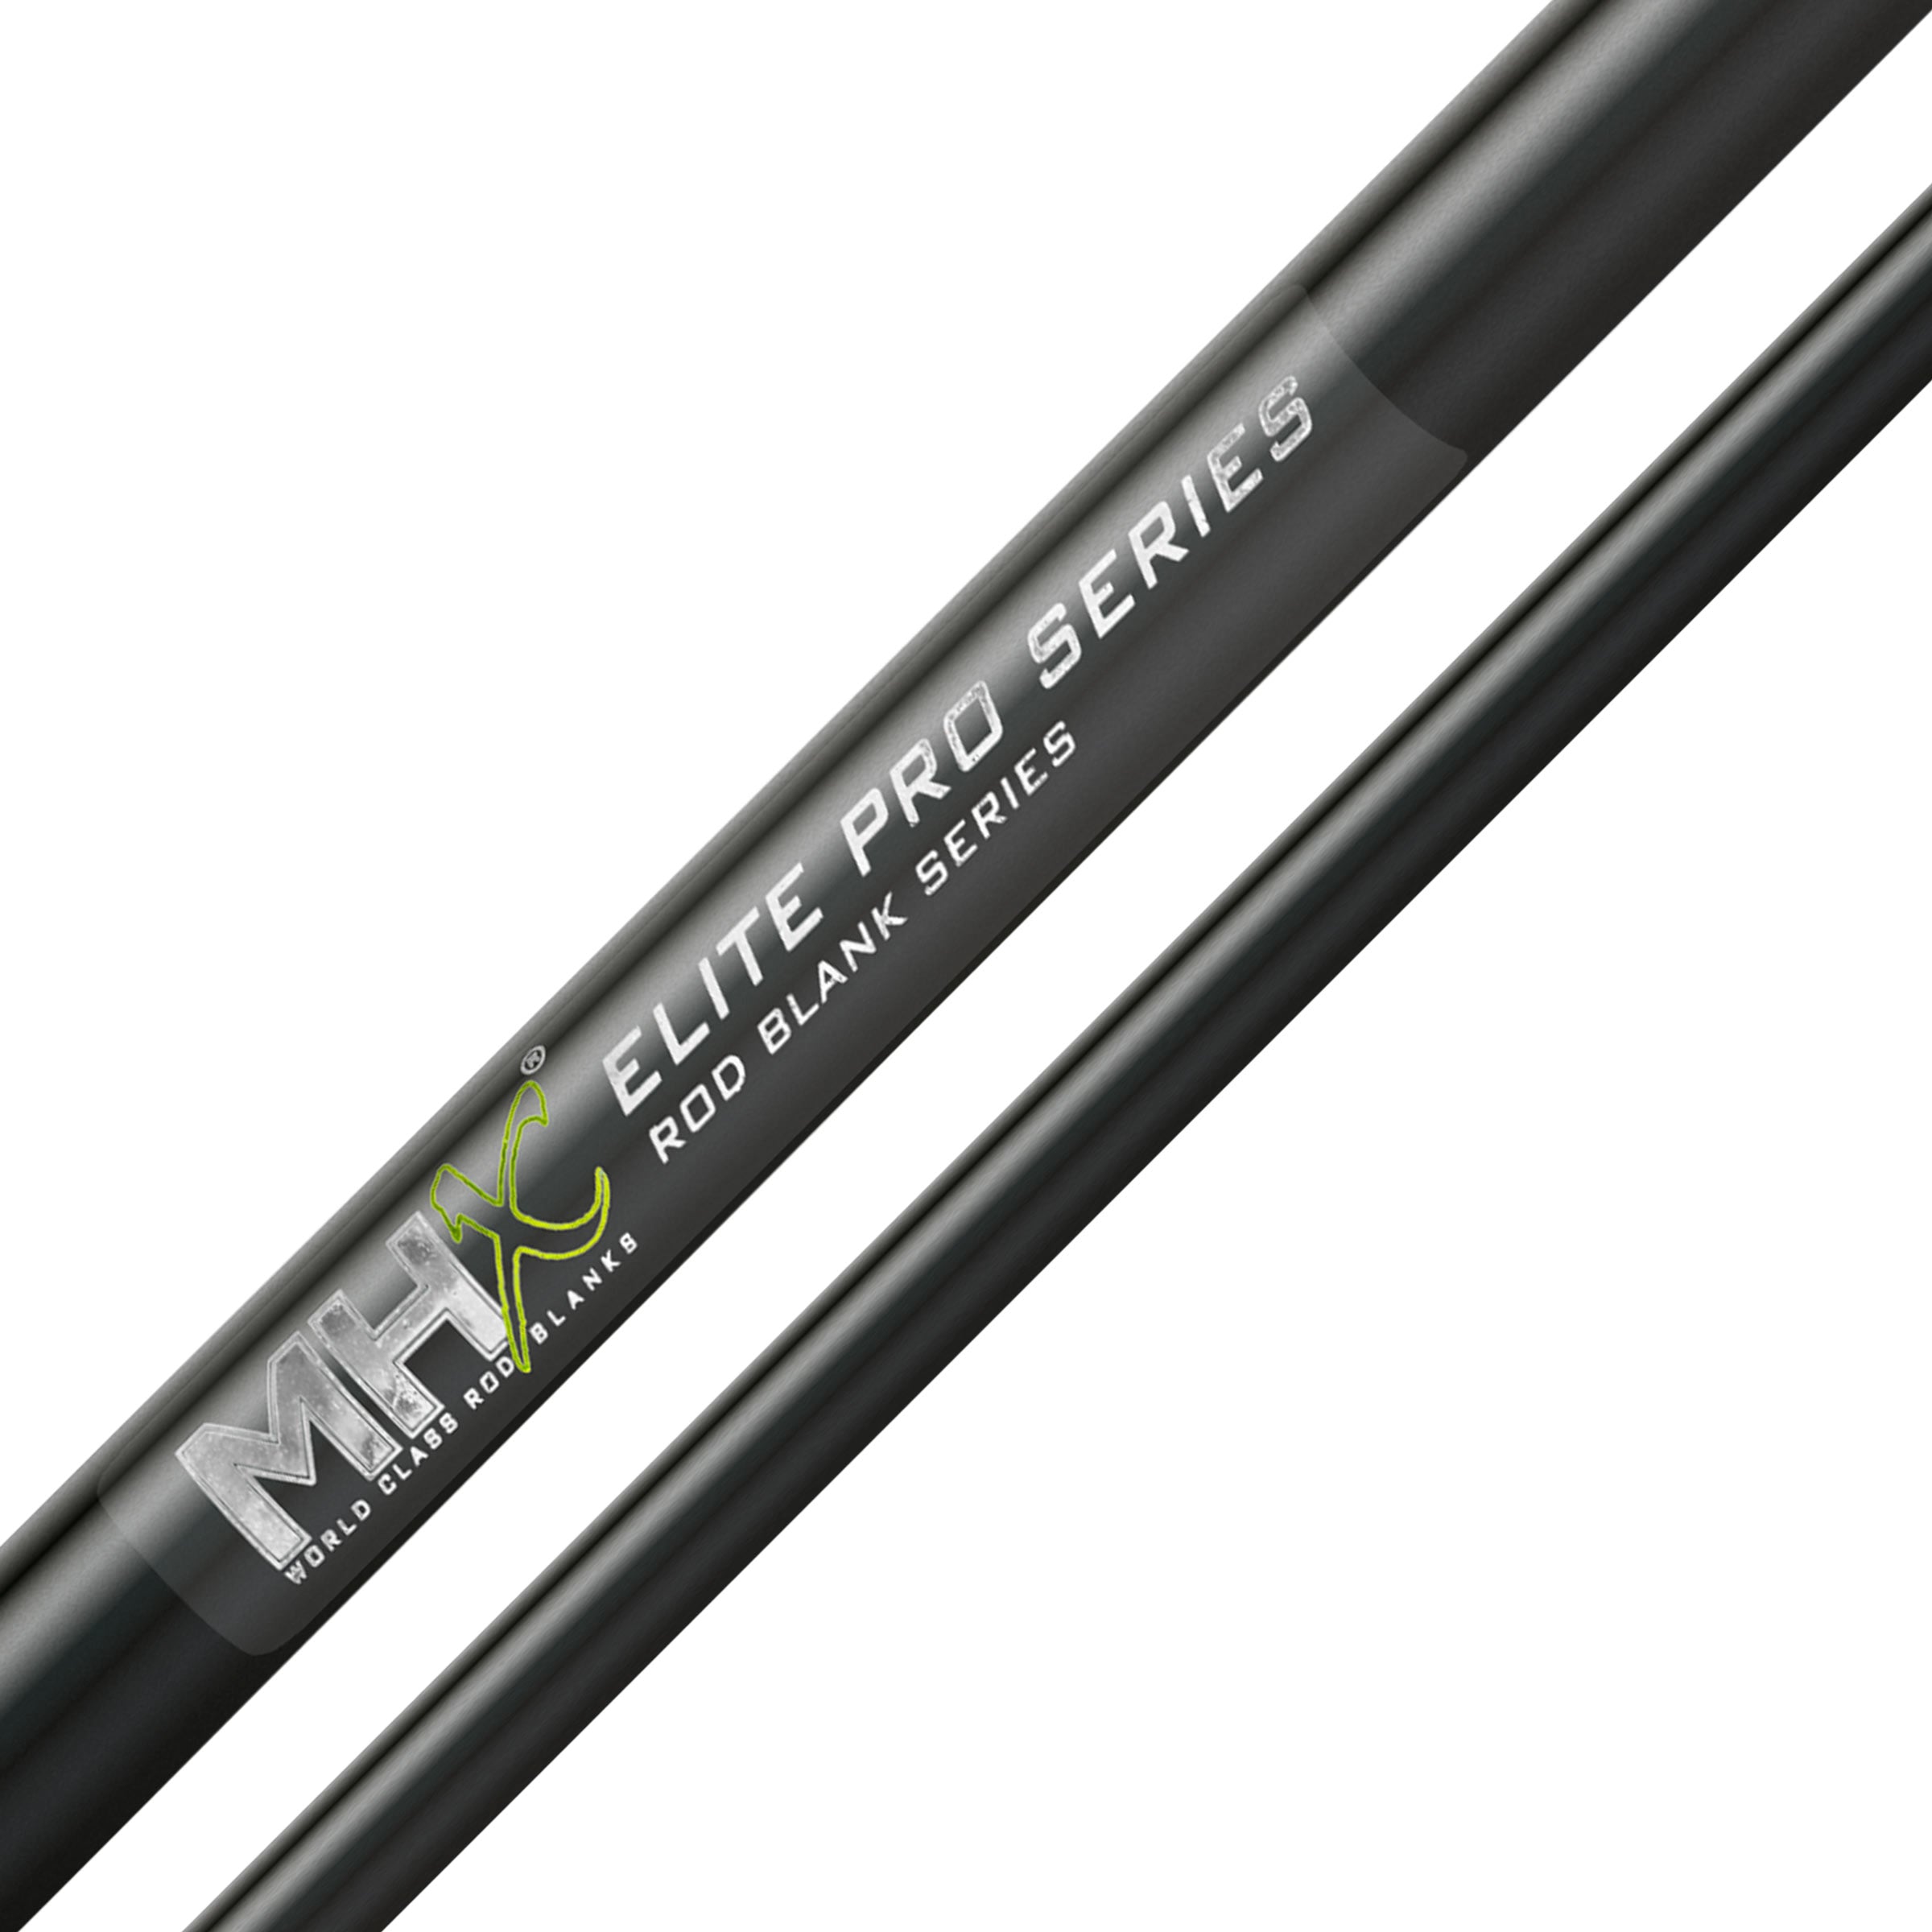 MHX 7'6" Medium Elite Pro 2pc Rod Blank - NEPS90MMF-2-MHX